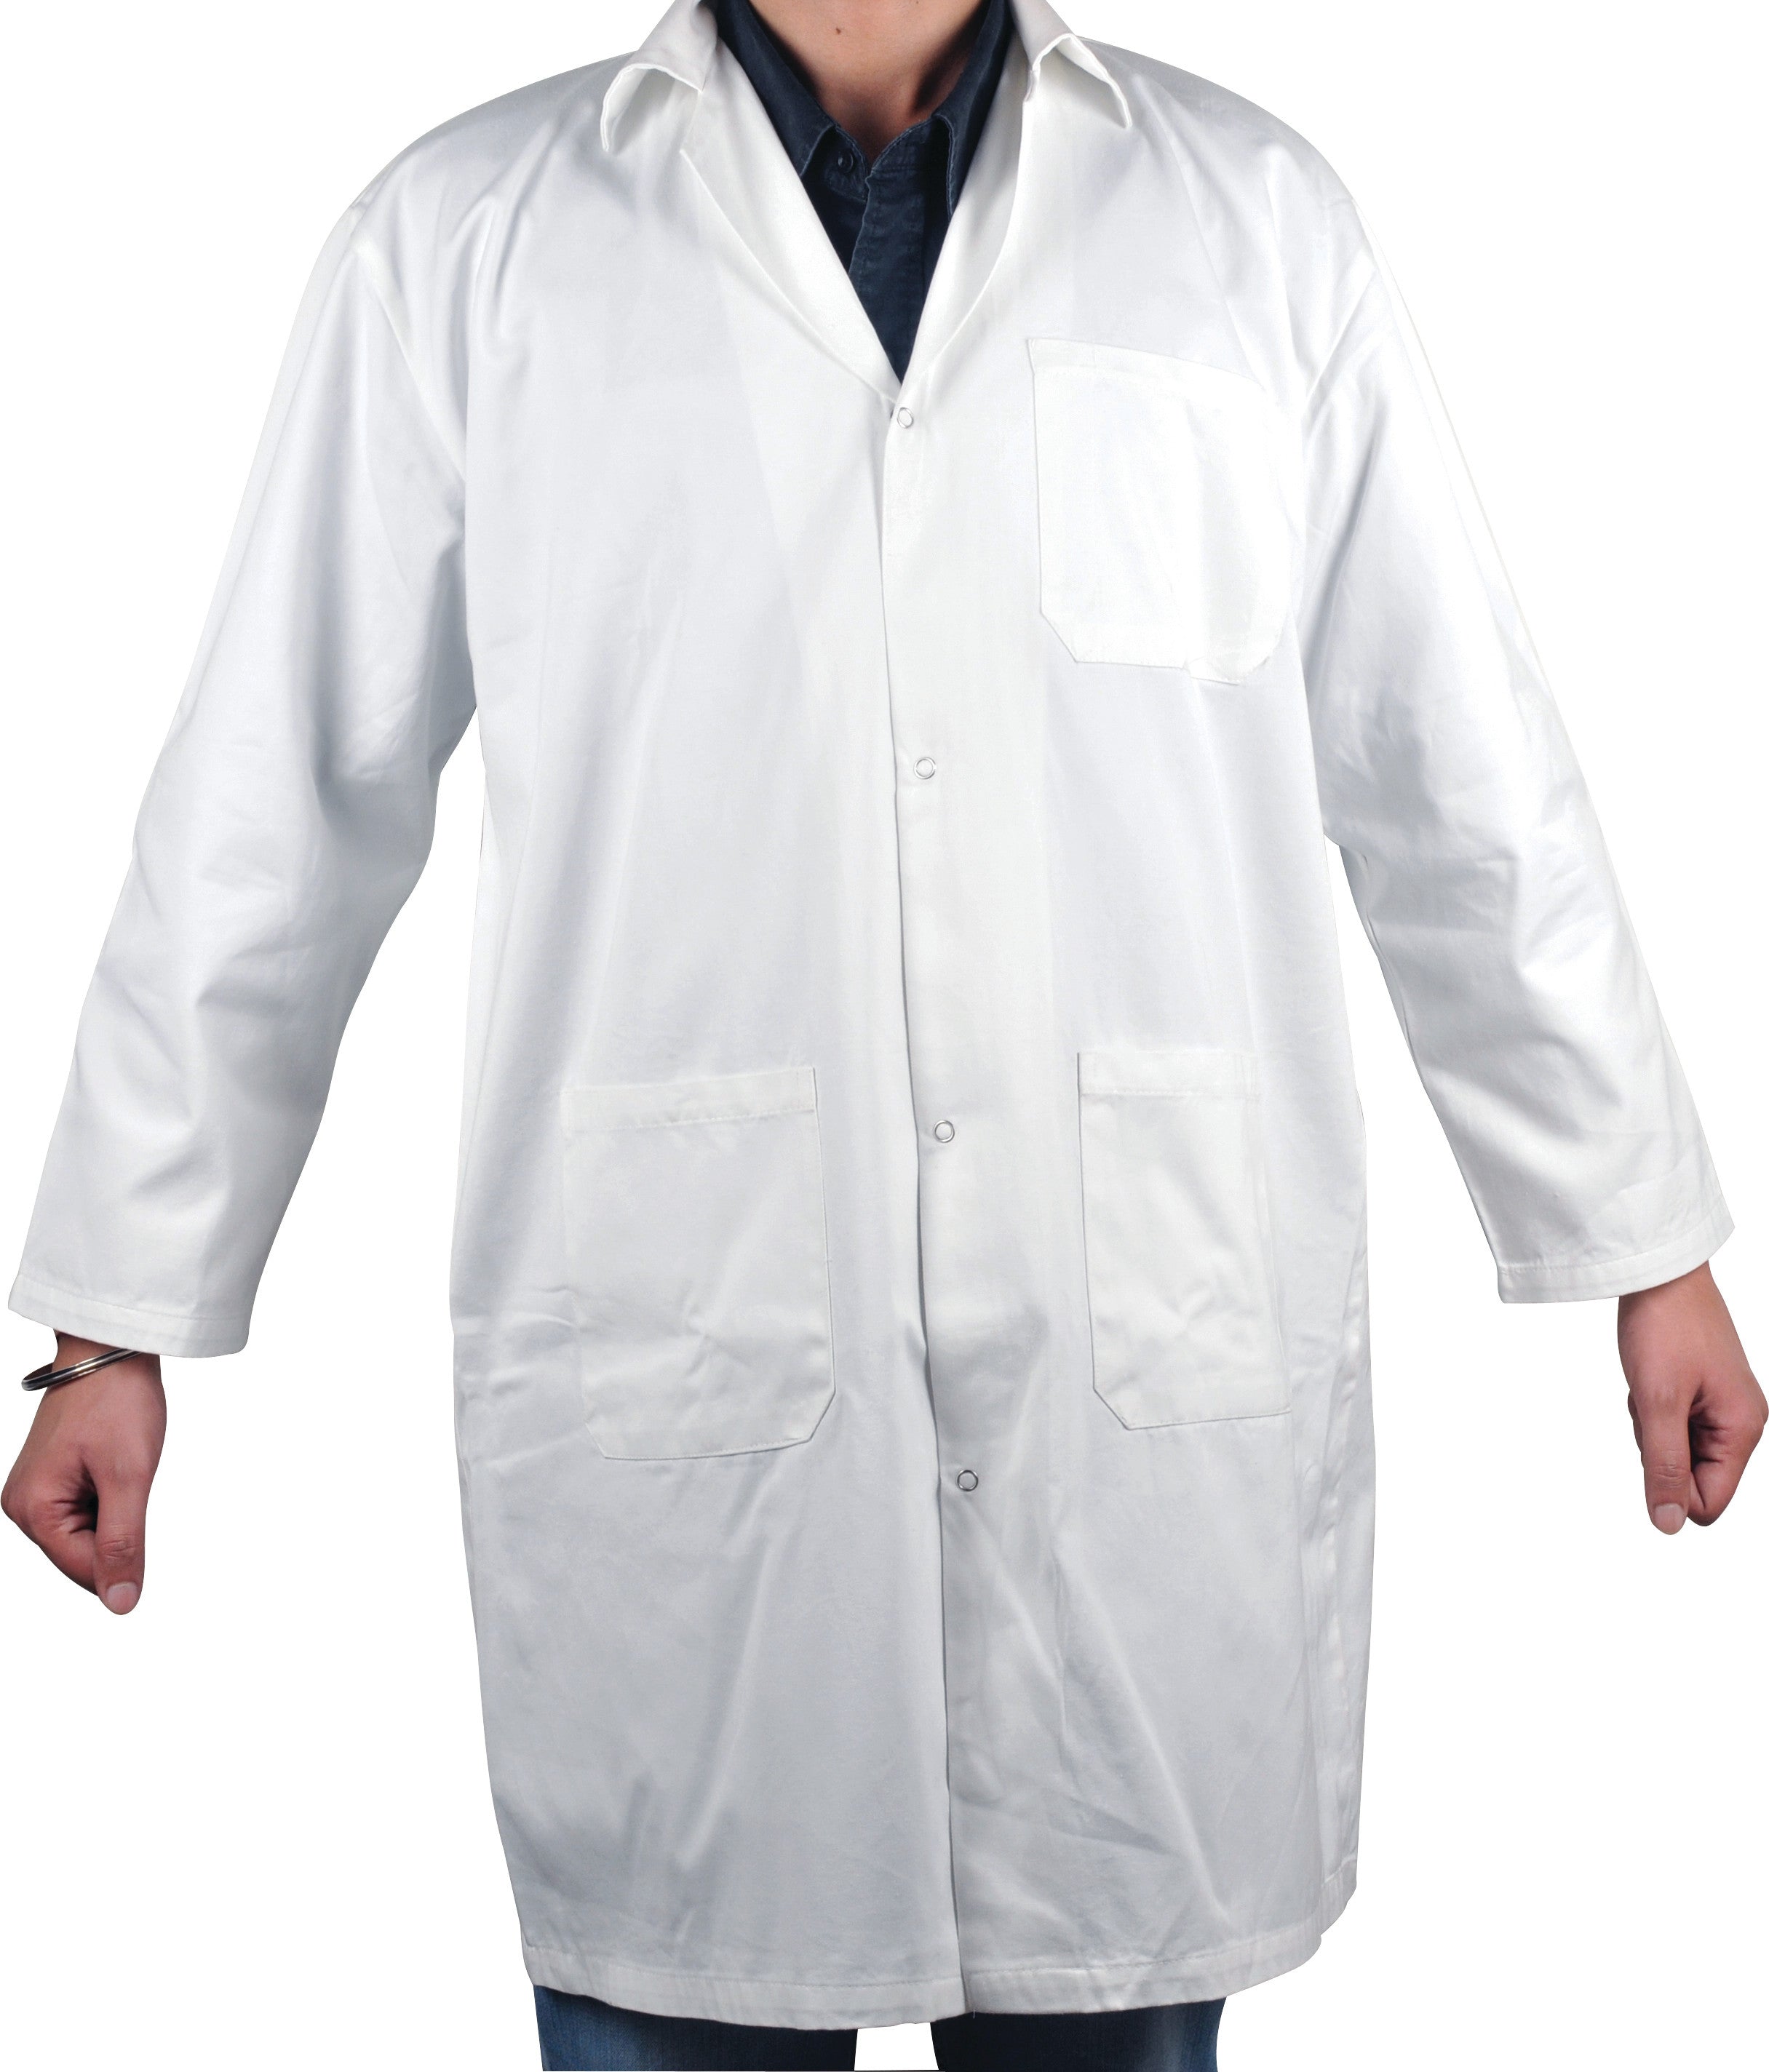 3 Pocket Lab Coat, Large